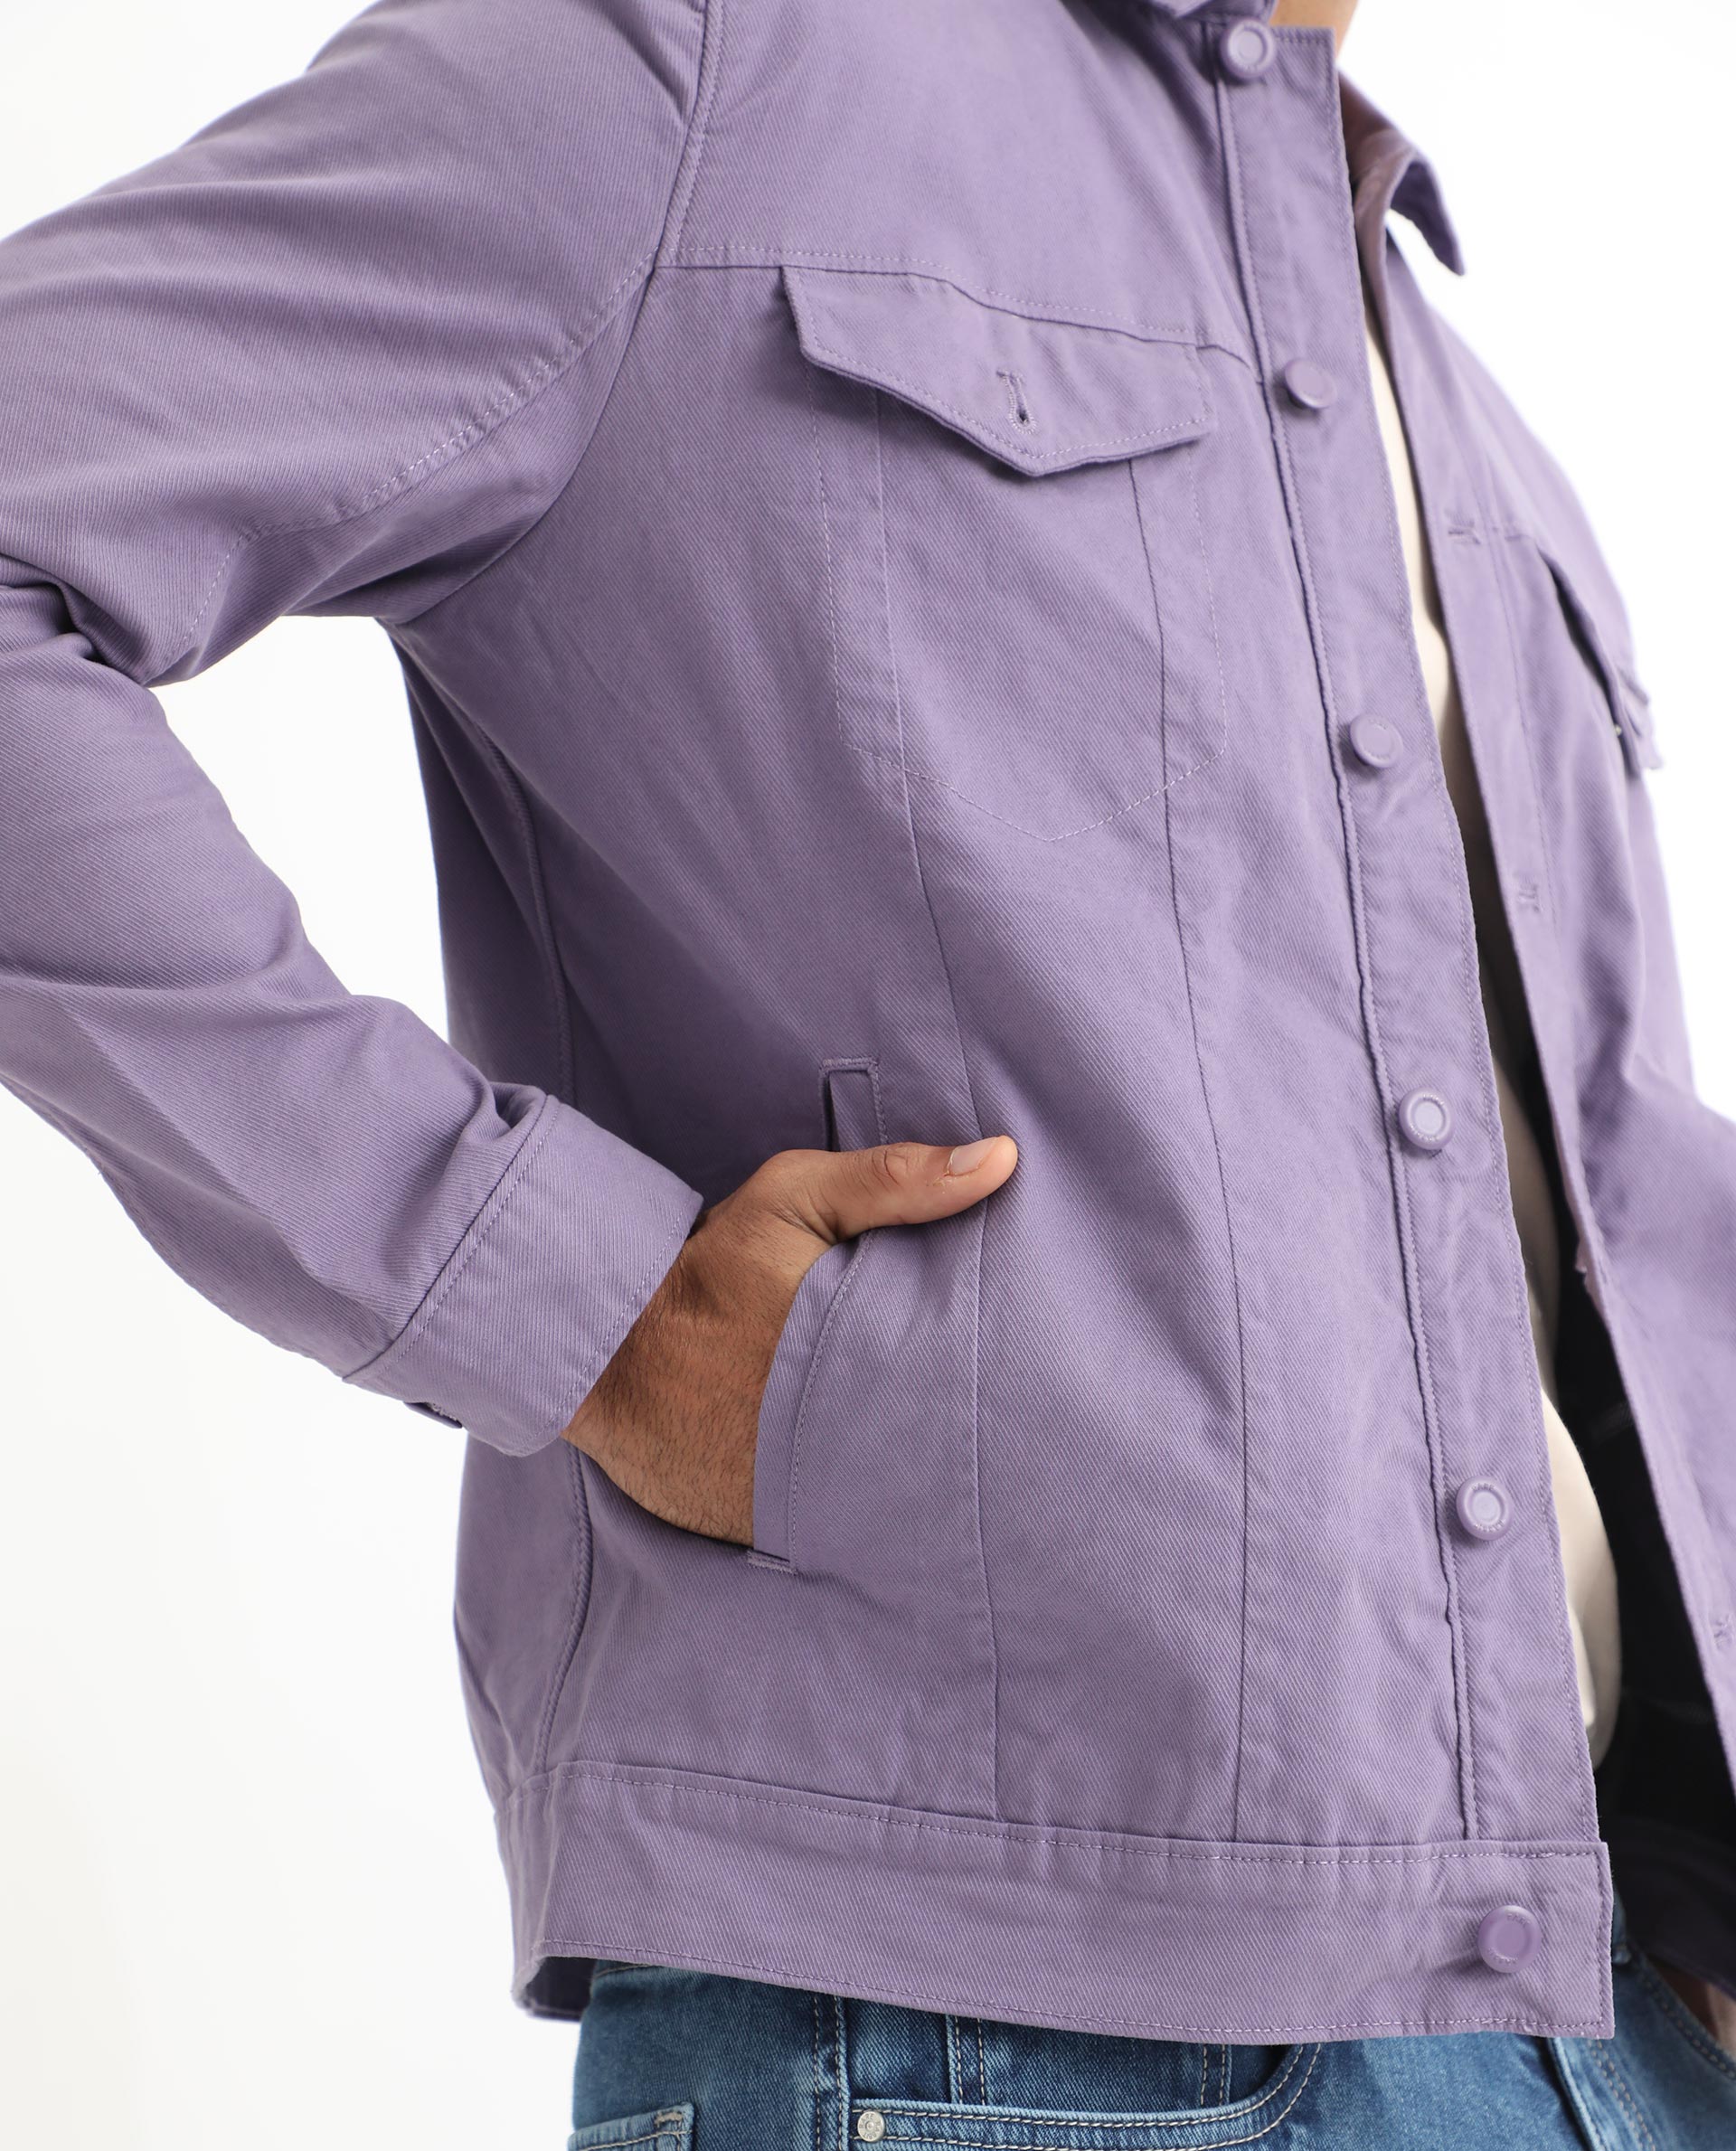 rare rabbit mens vintage pastel purple jacket cotton lycra fabric collared neck woven full sleeves button closure regular fit